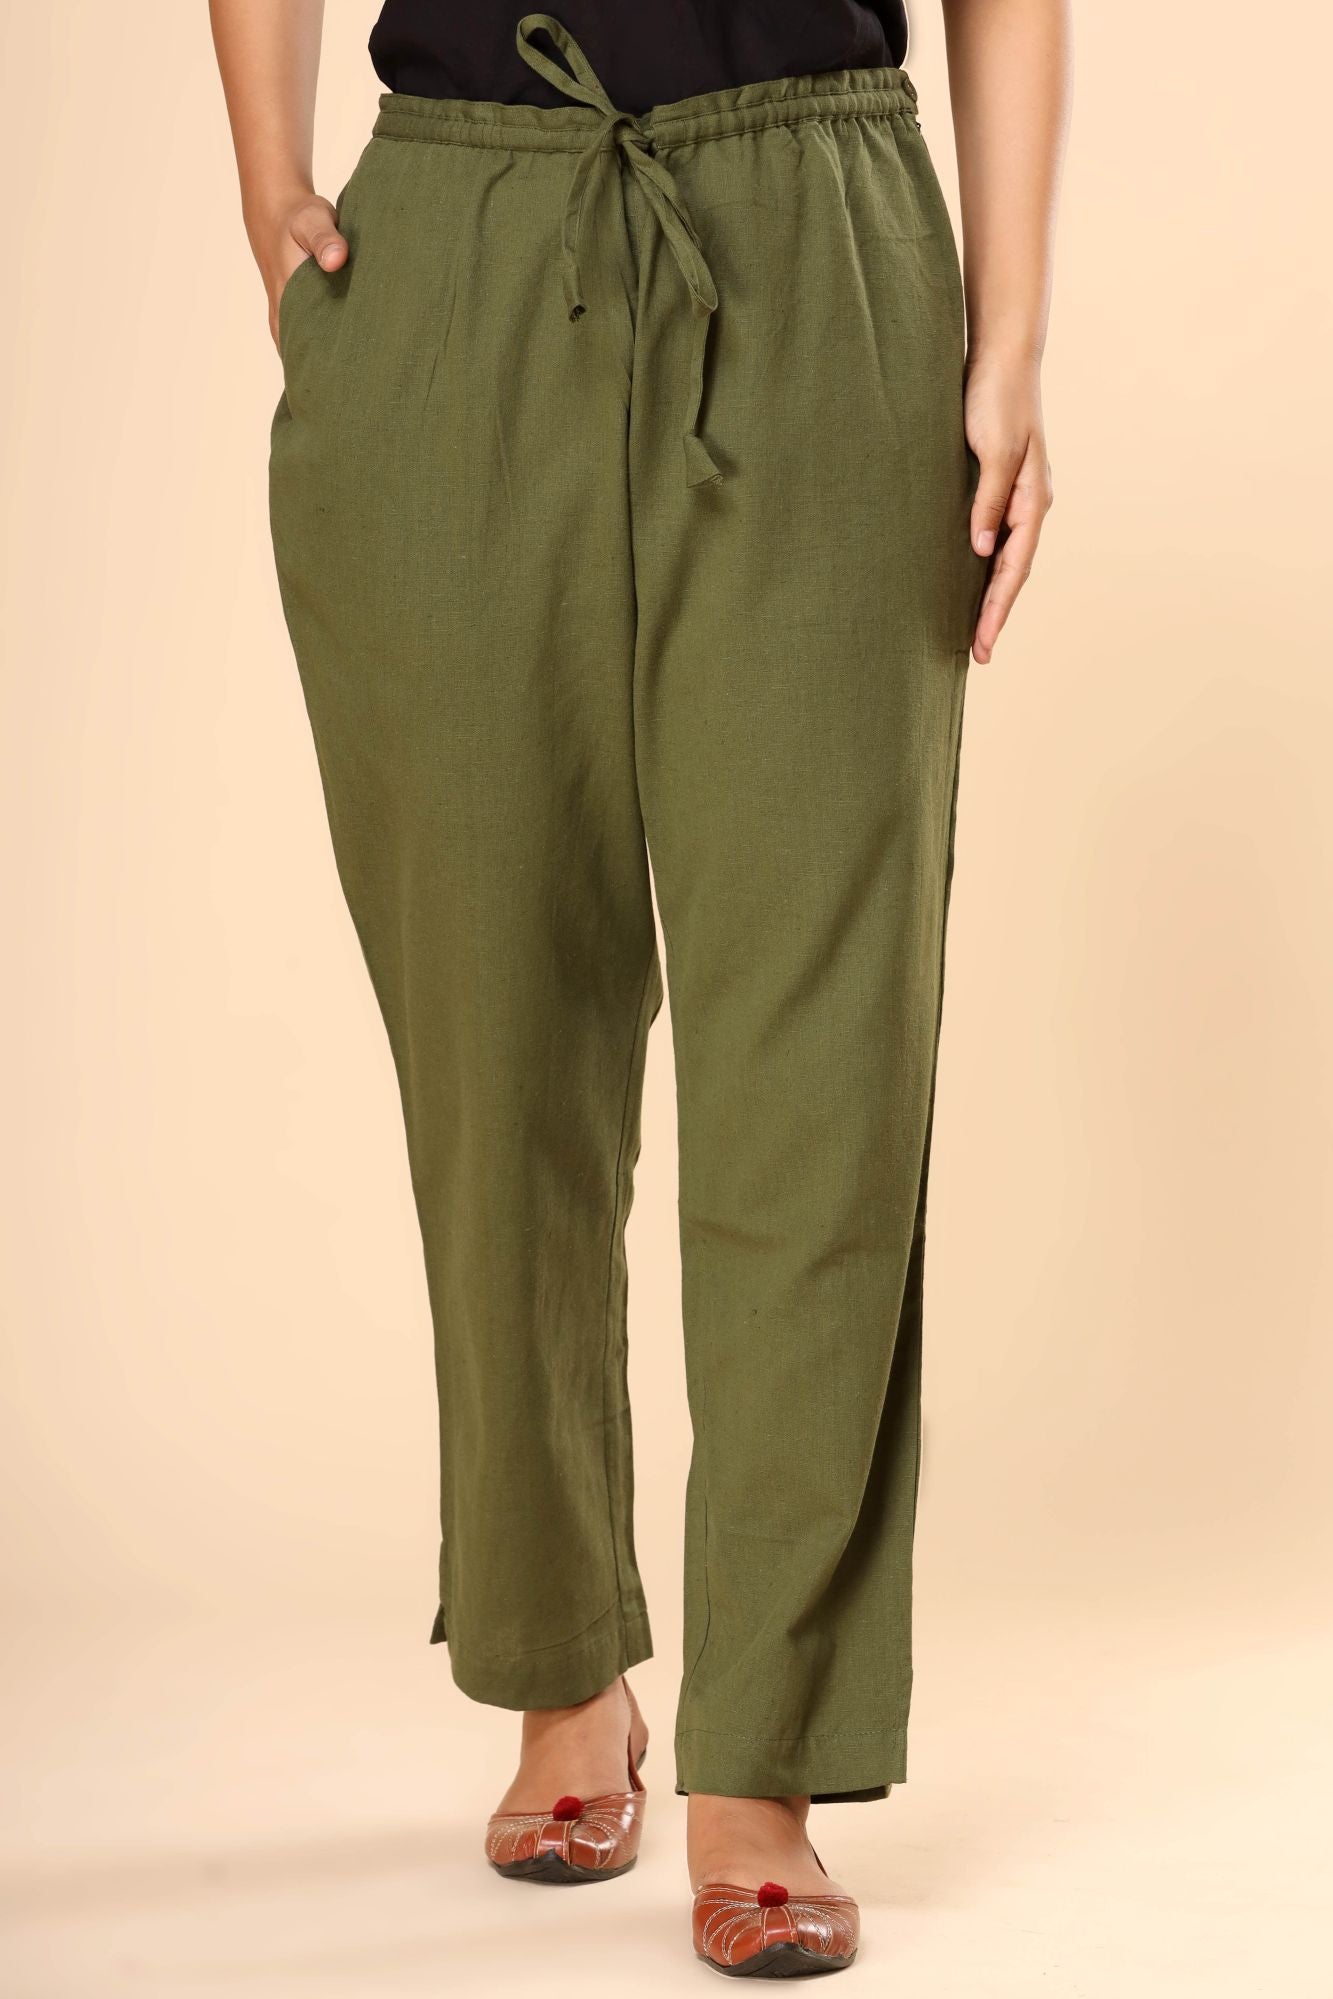 Hiltl - Light Olive Green Linen & Cotton Five Pocket Pant